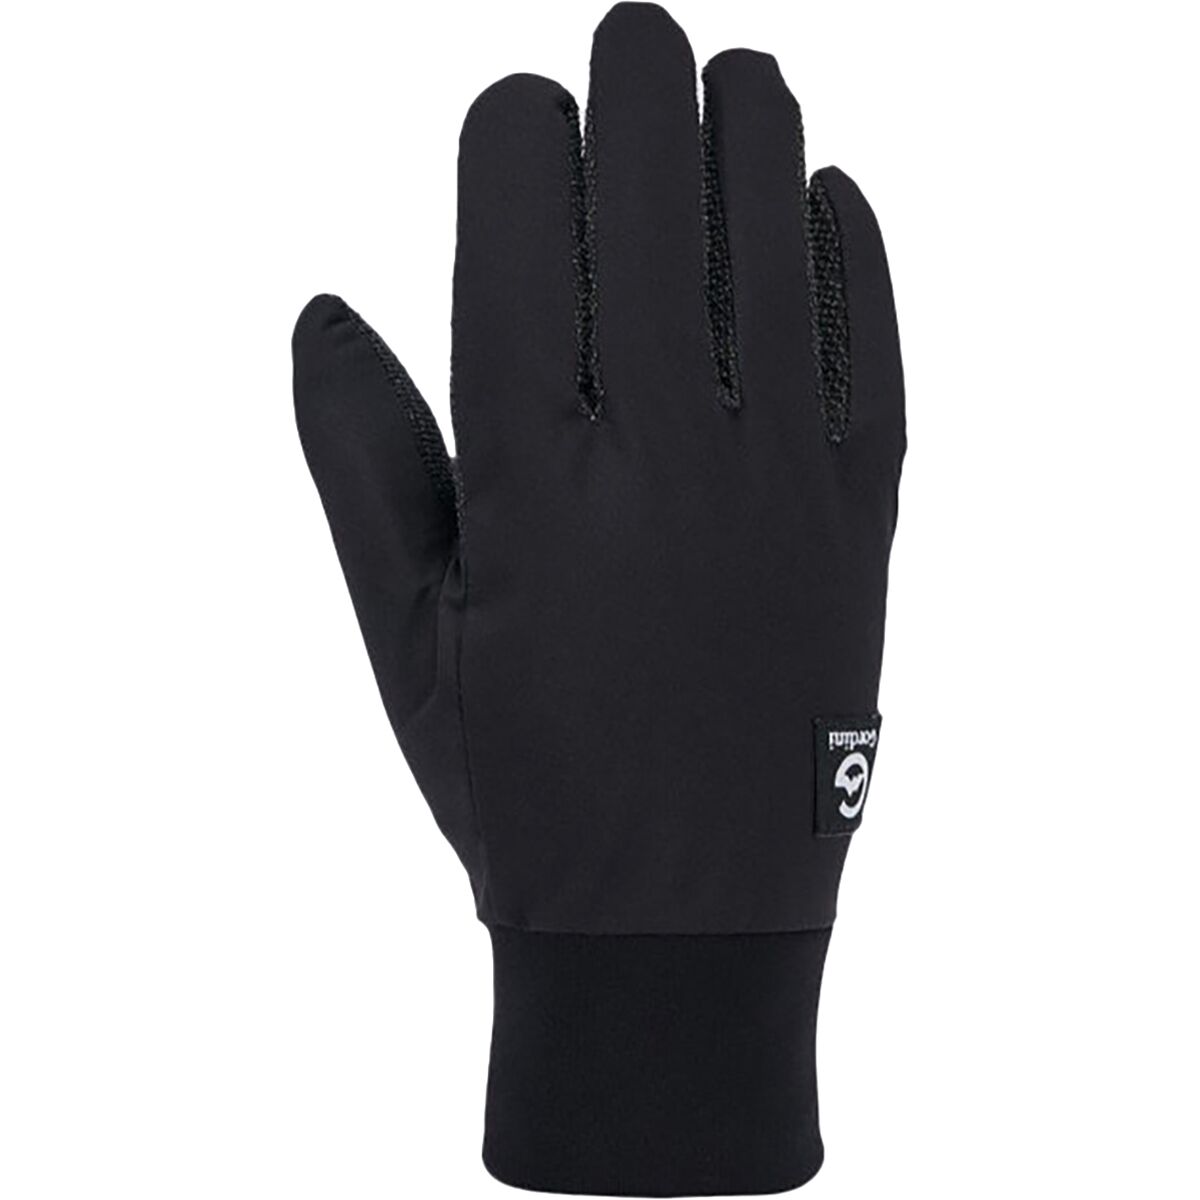 Gordini Front Line LT Glove - Women's